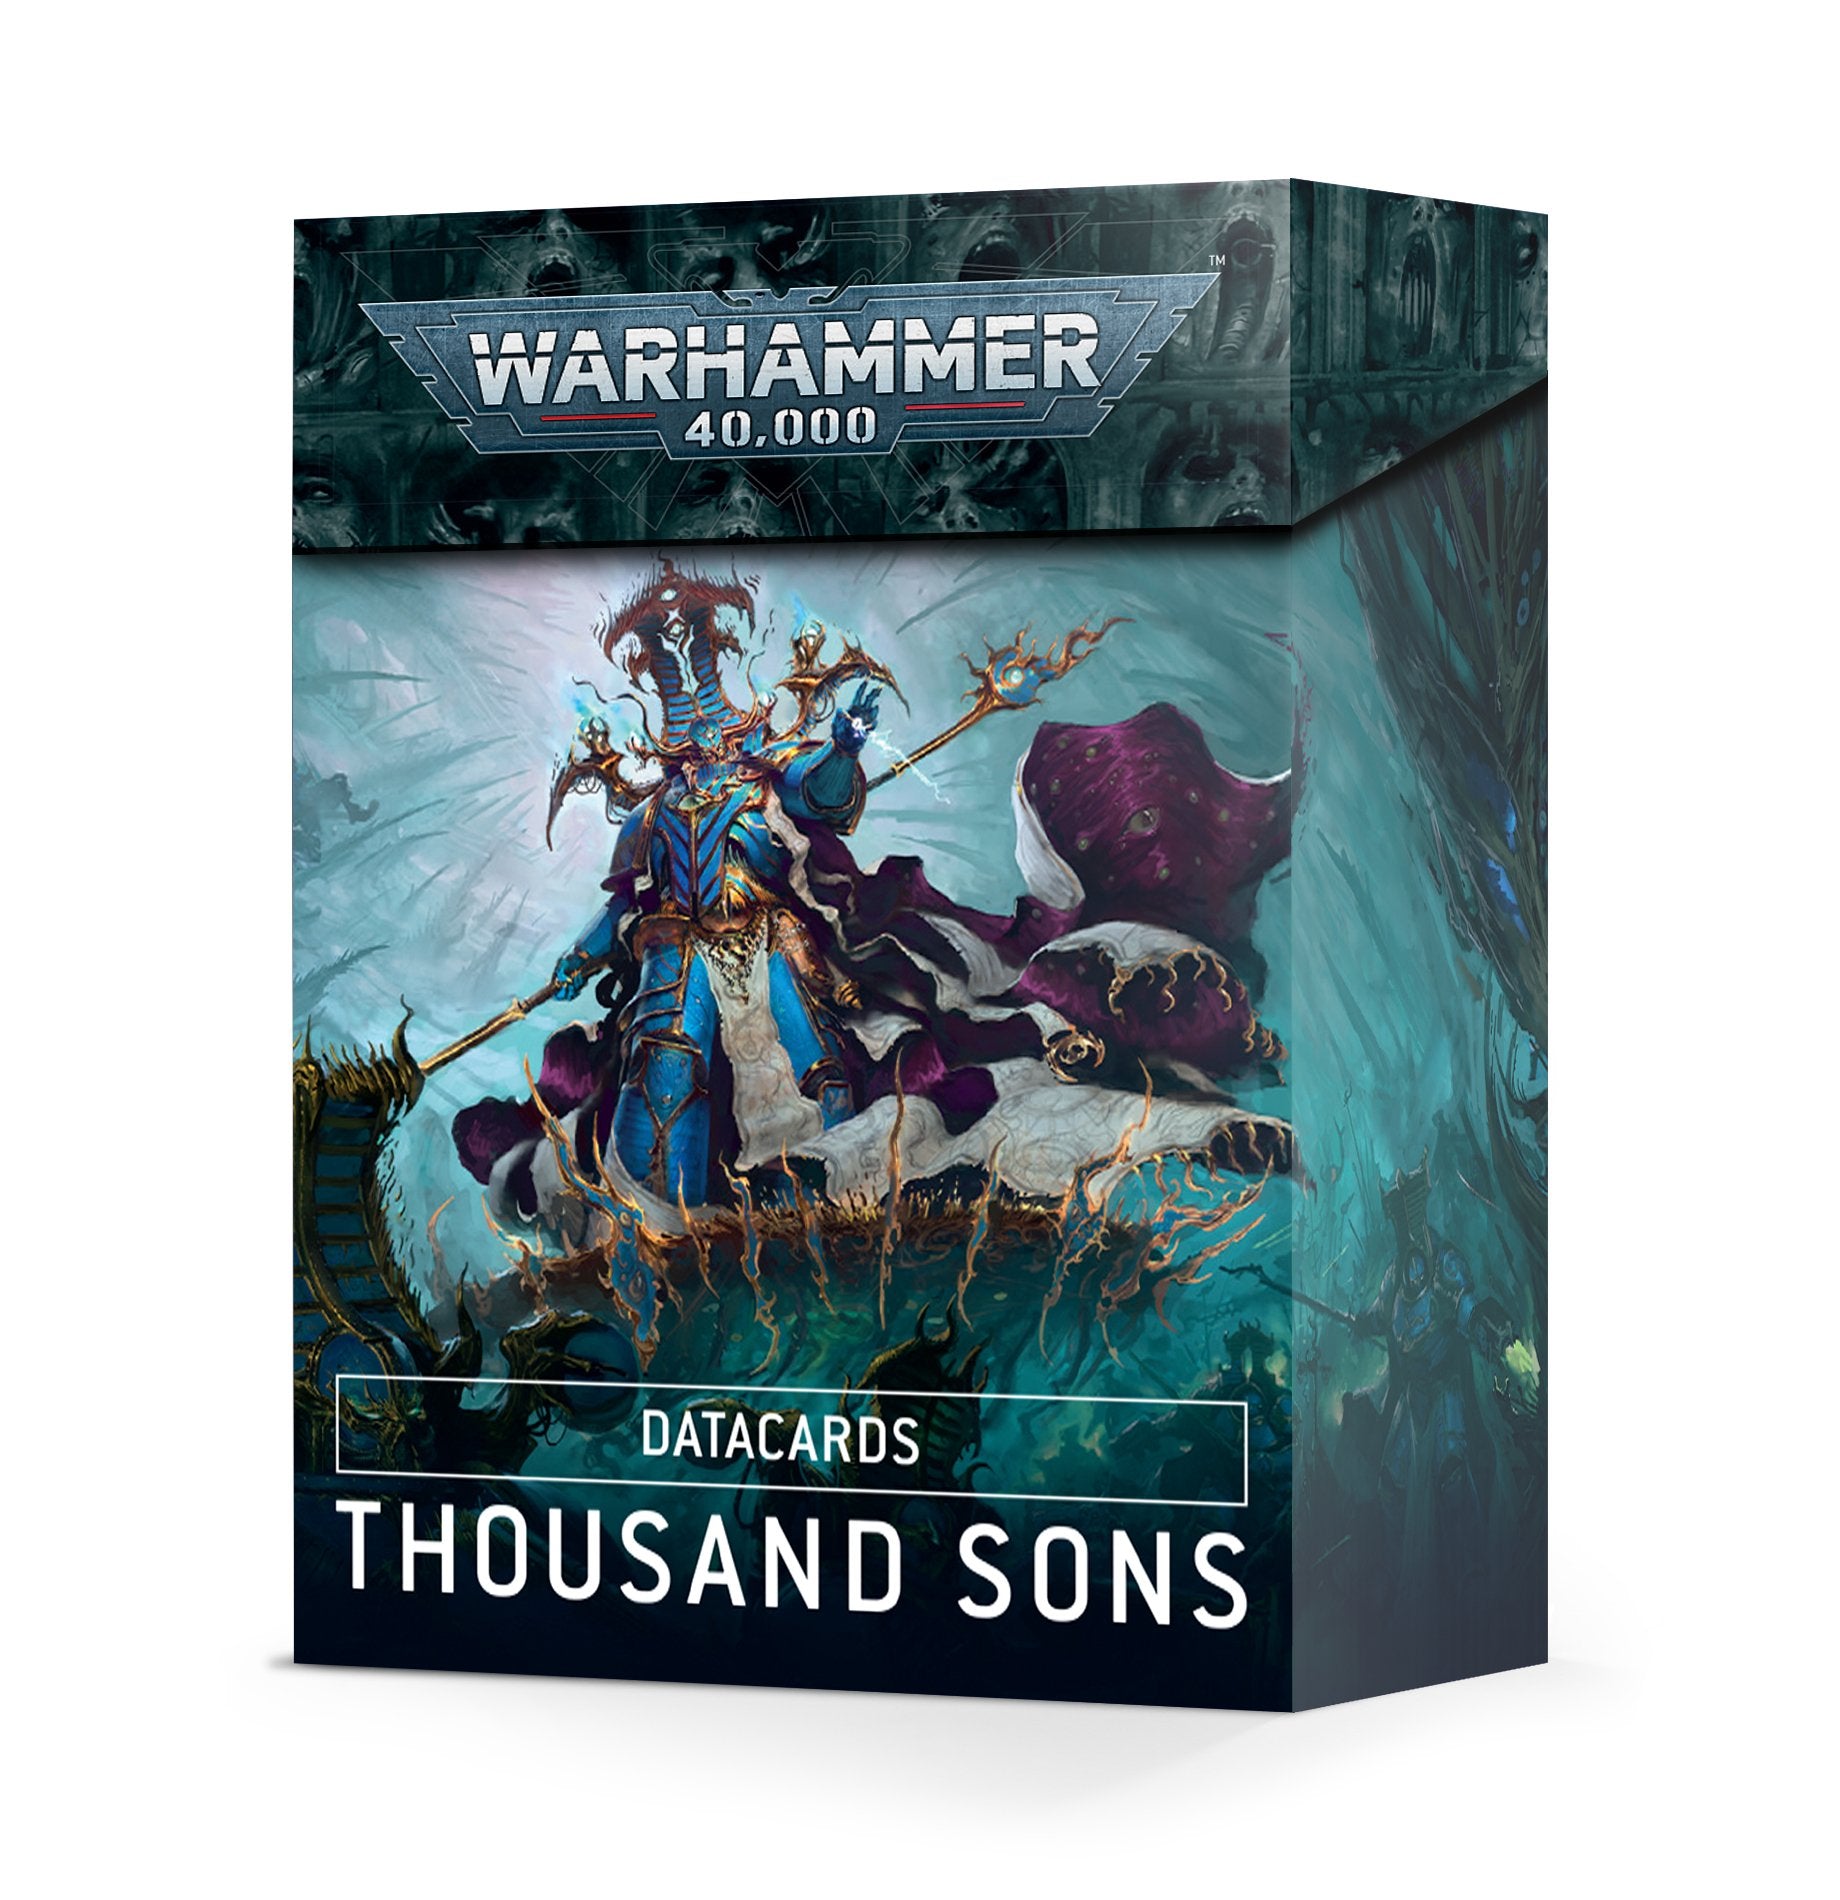 Warhammer 40,000: Thousand Sons Datacards